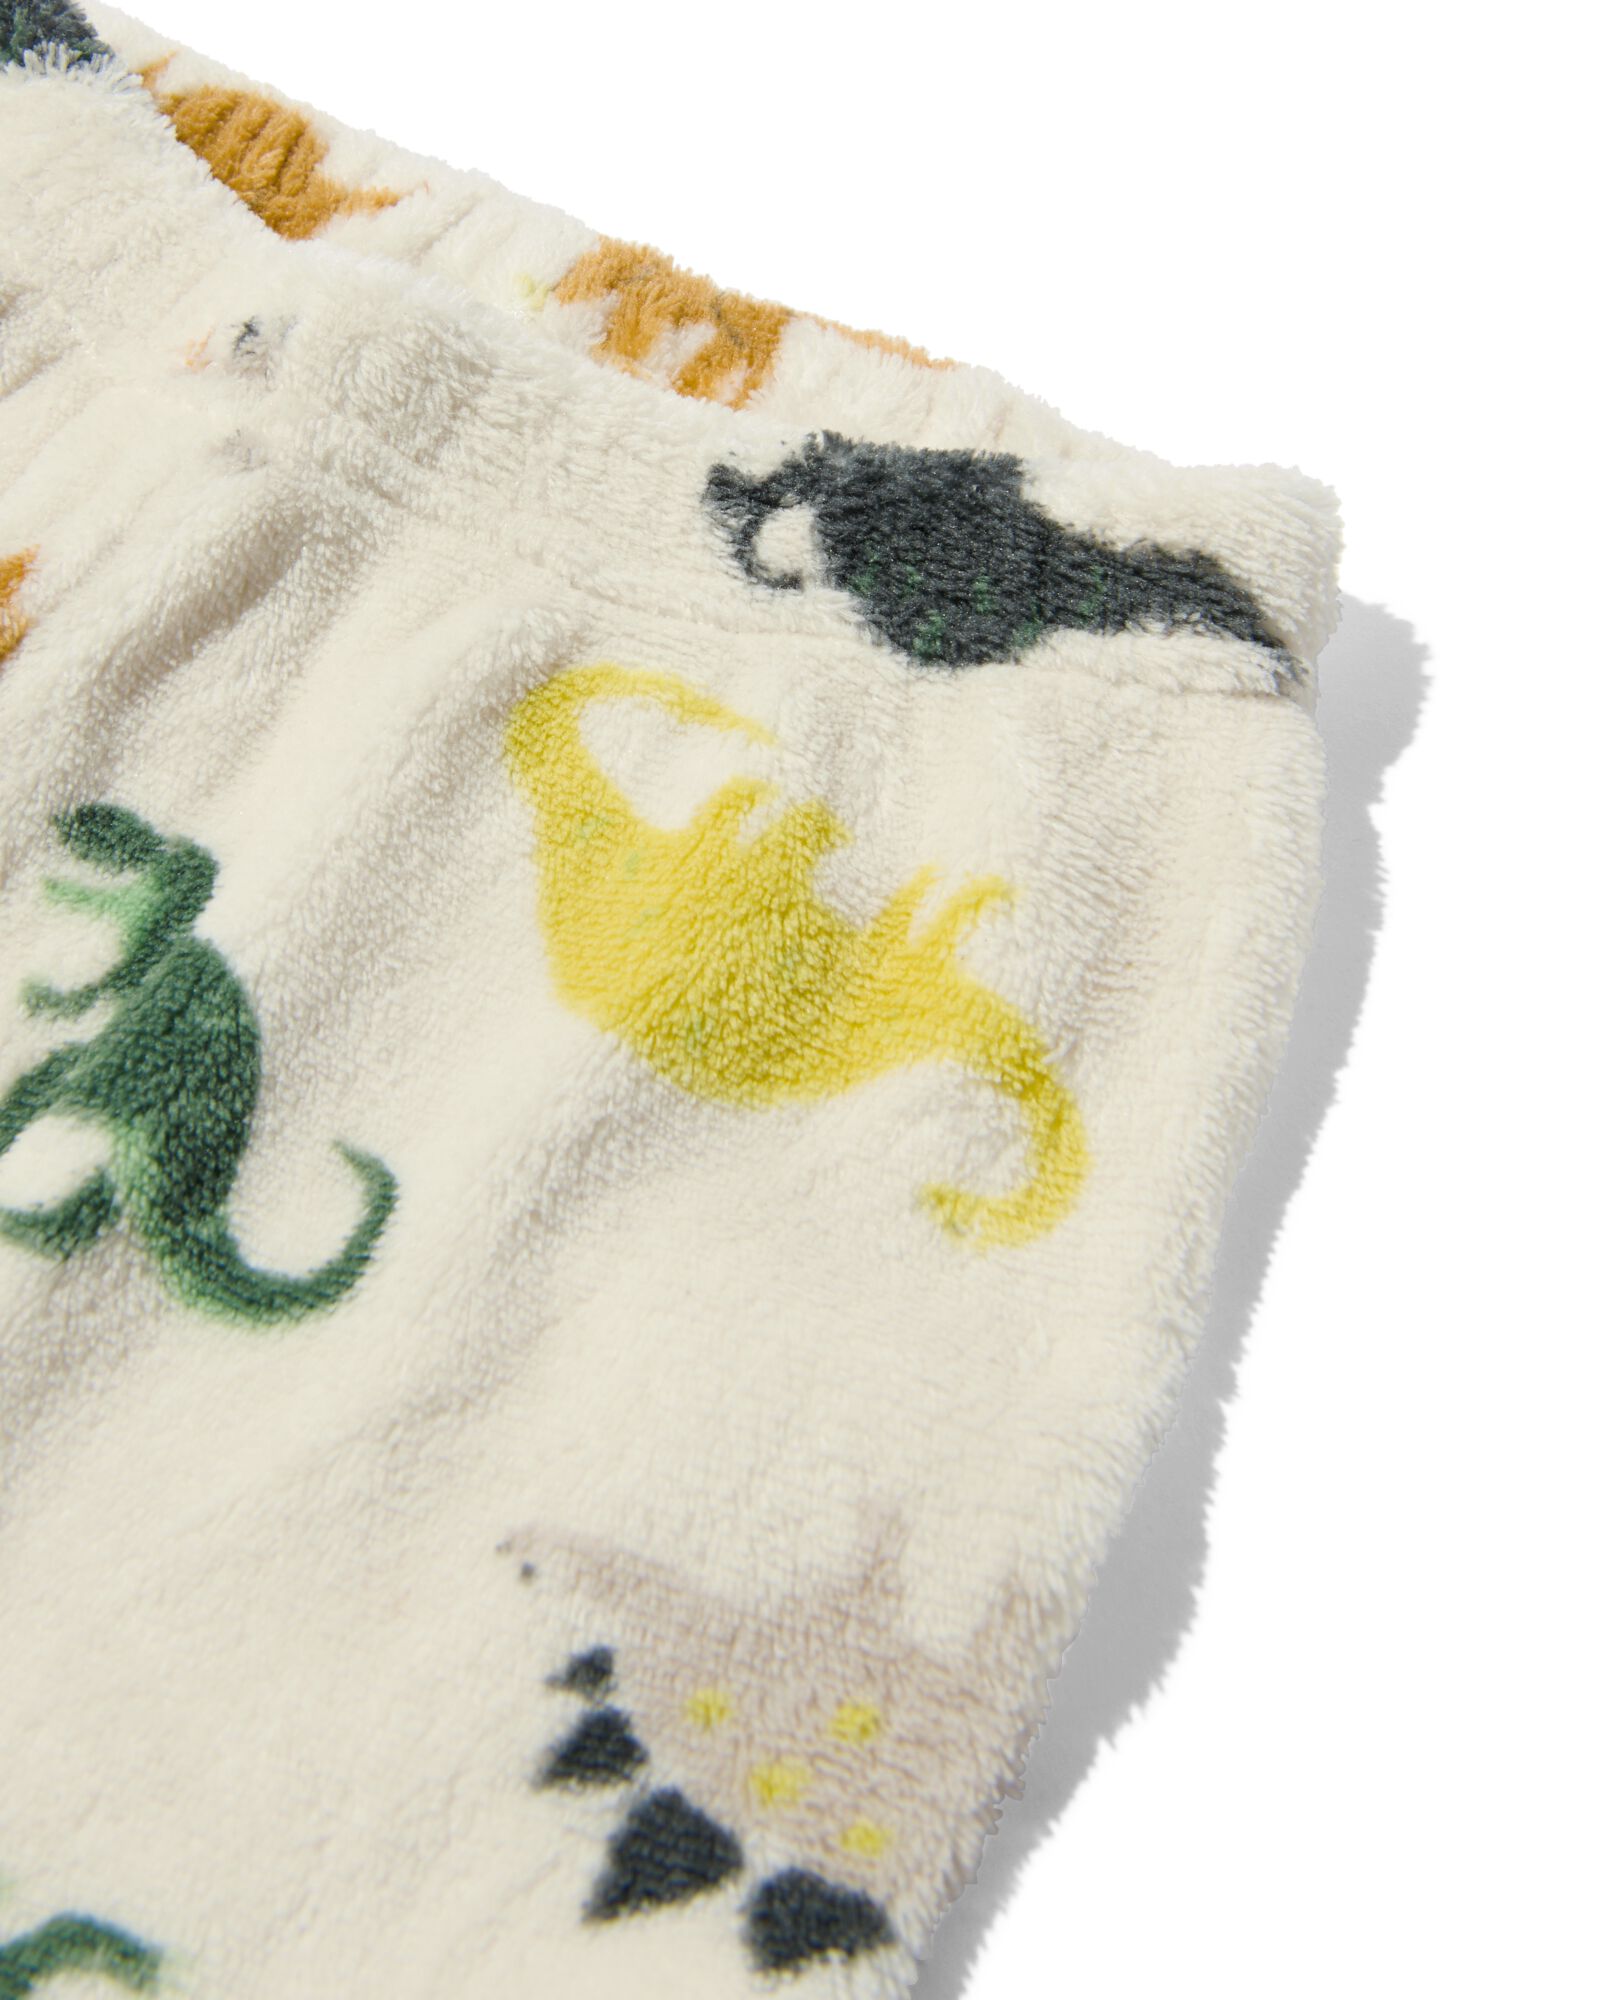 pyjama enfant polaire dinosaure beige beige - 23080380BEIGE - HEMA